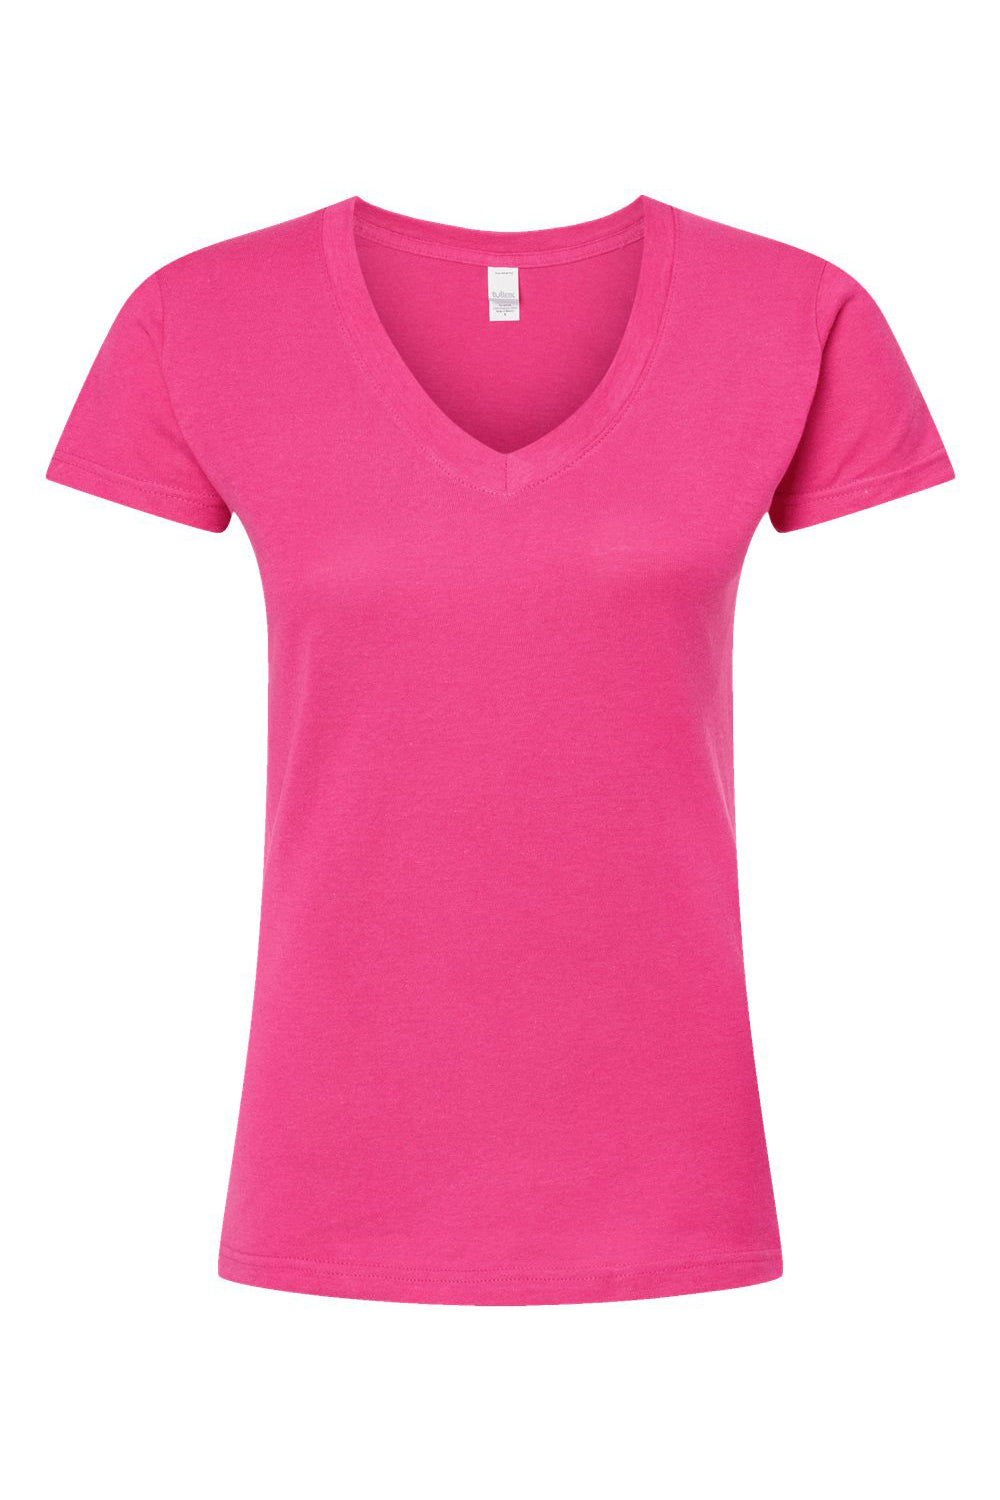 Tultex 214 Womens Fine Jersey Short Sleeve V-Neck T-Shirt Fuchsia Pink Flat Front